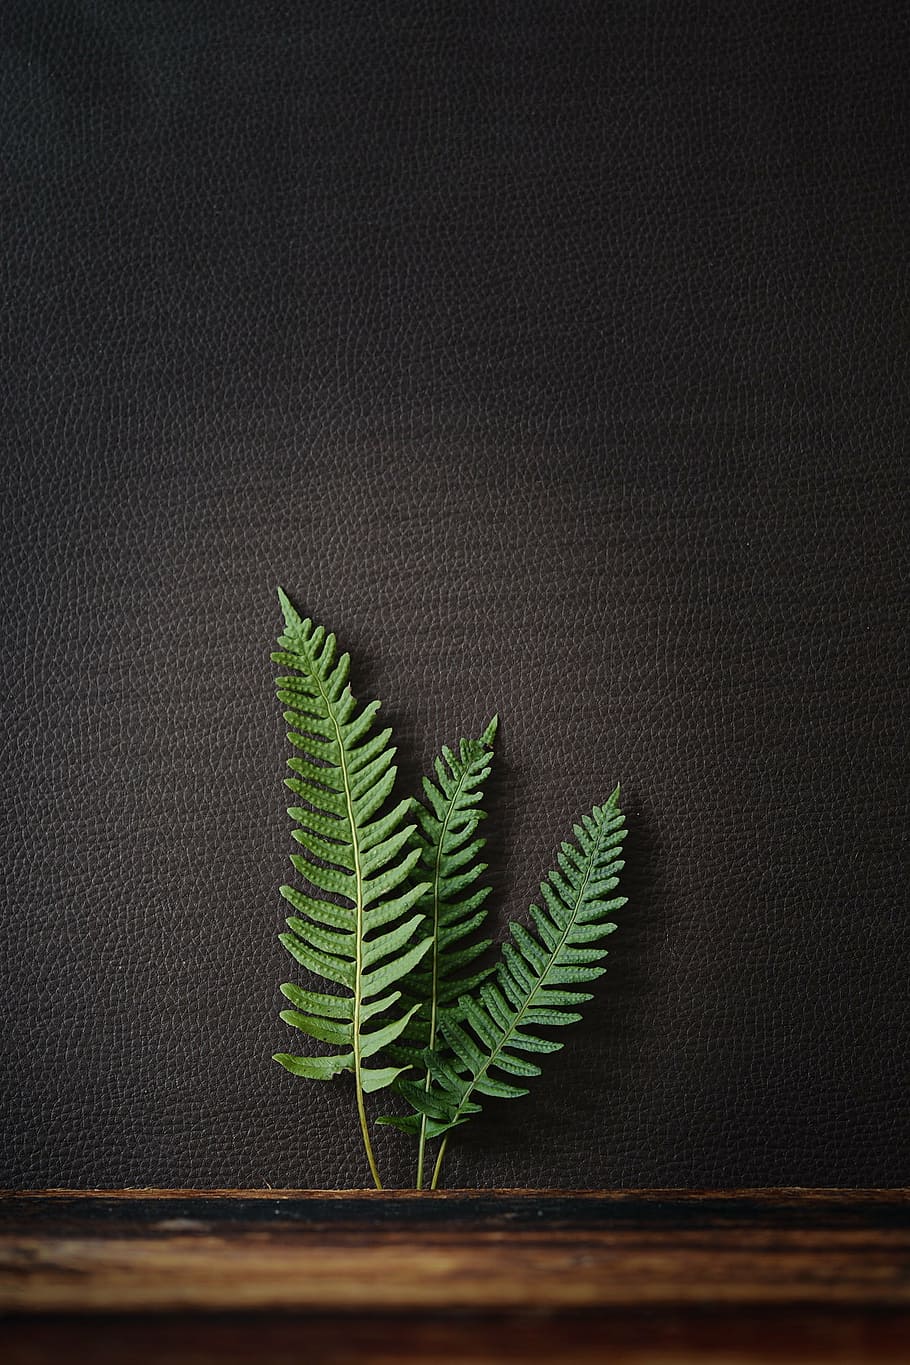 three, green, fern leaf, black, leather surface close-up photo, fern, plant, nature, fern plant, leaves